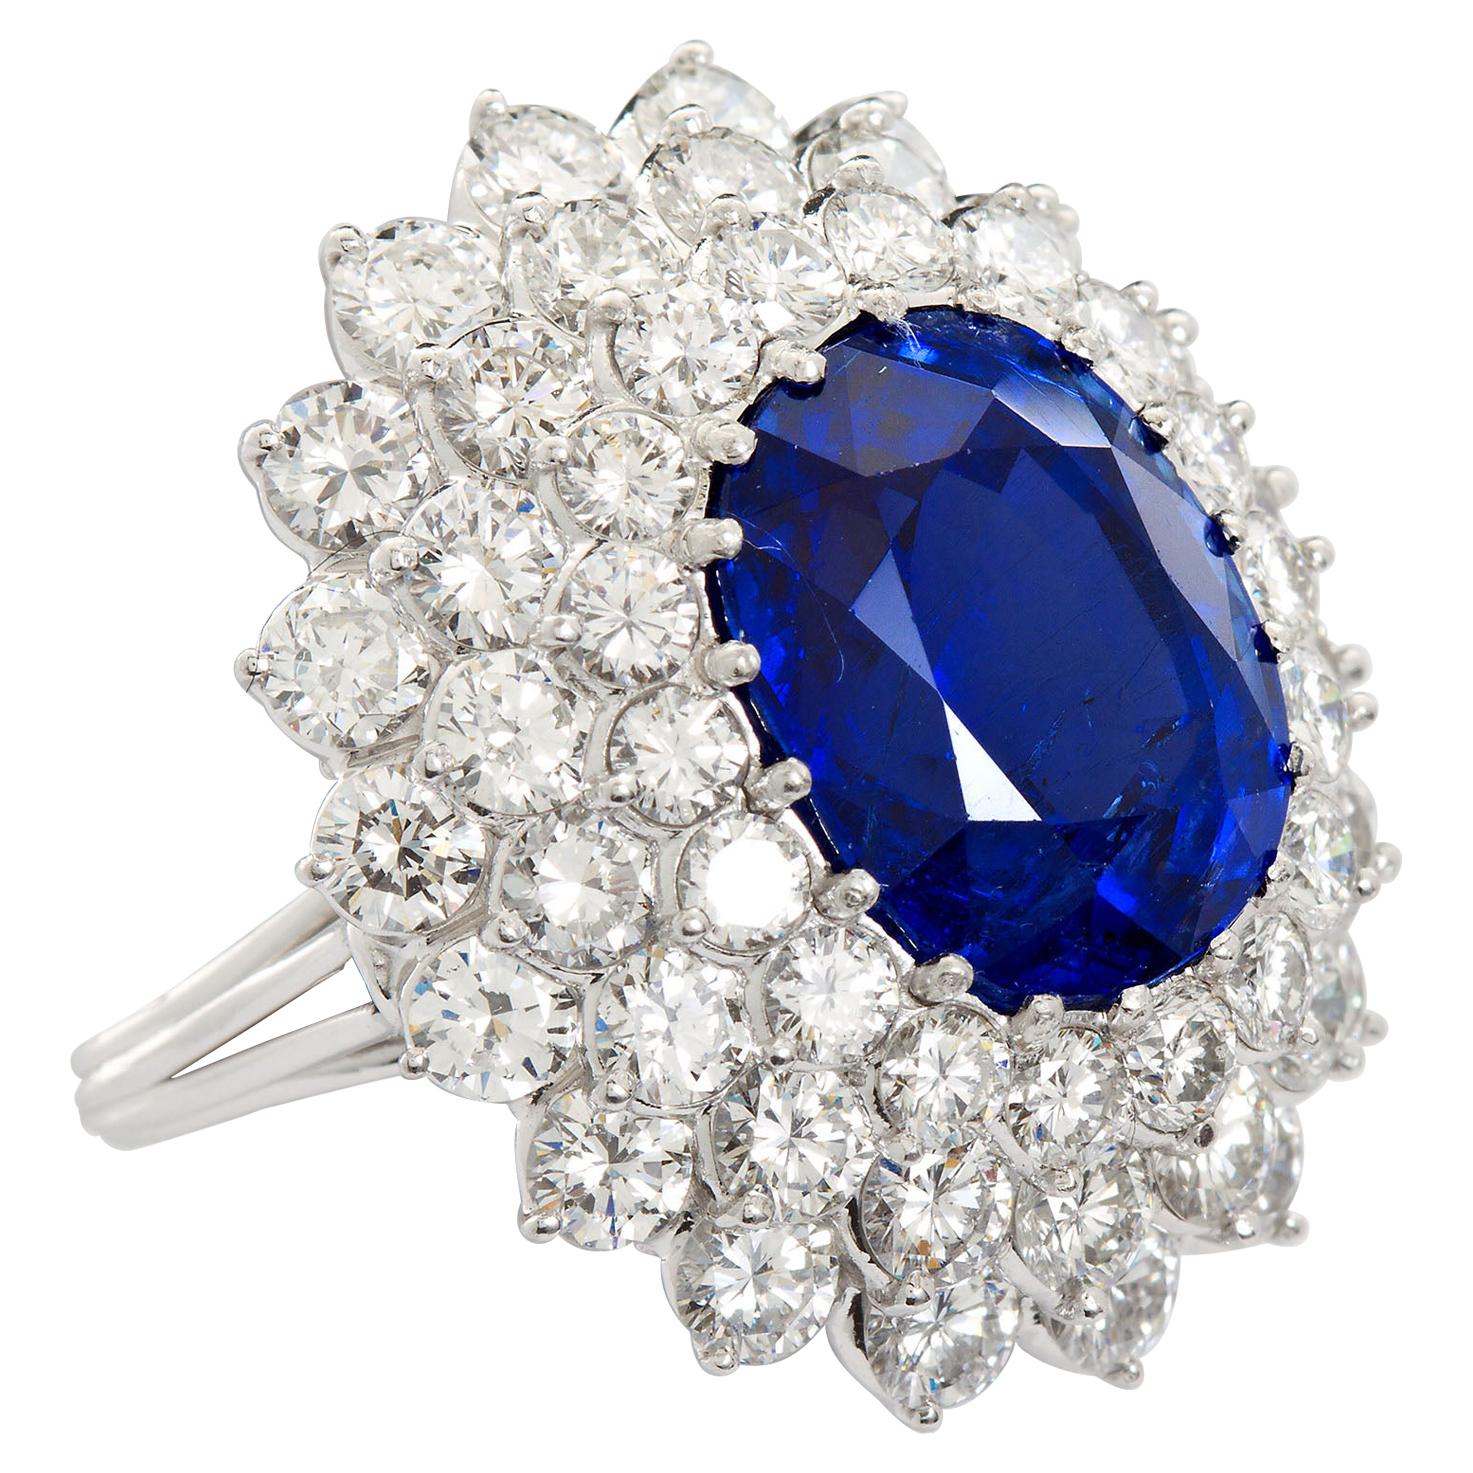 12.10 Carat Burma Unheated Oval Sapphire Diamond Cluster Ring